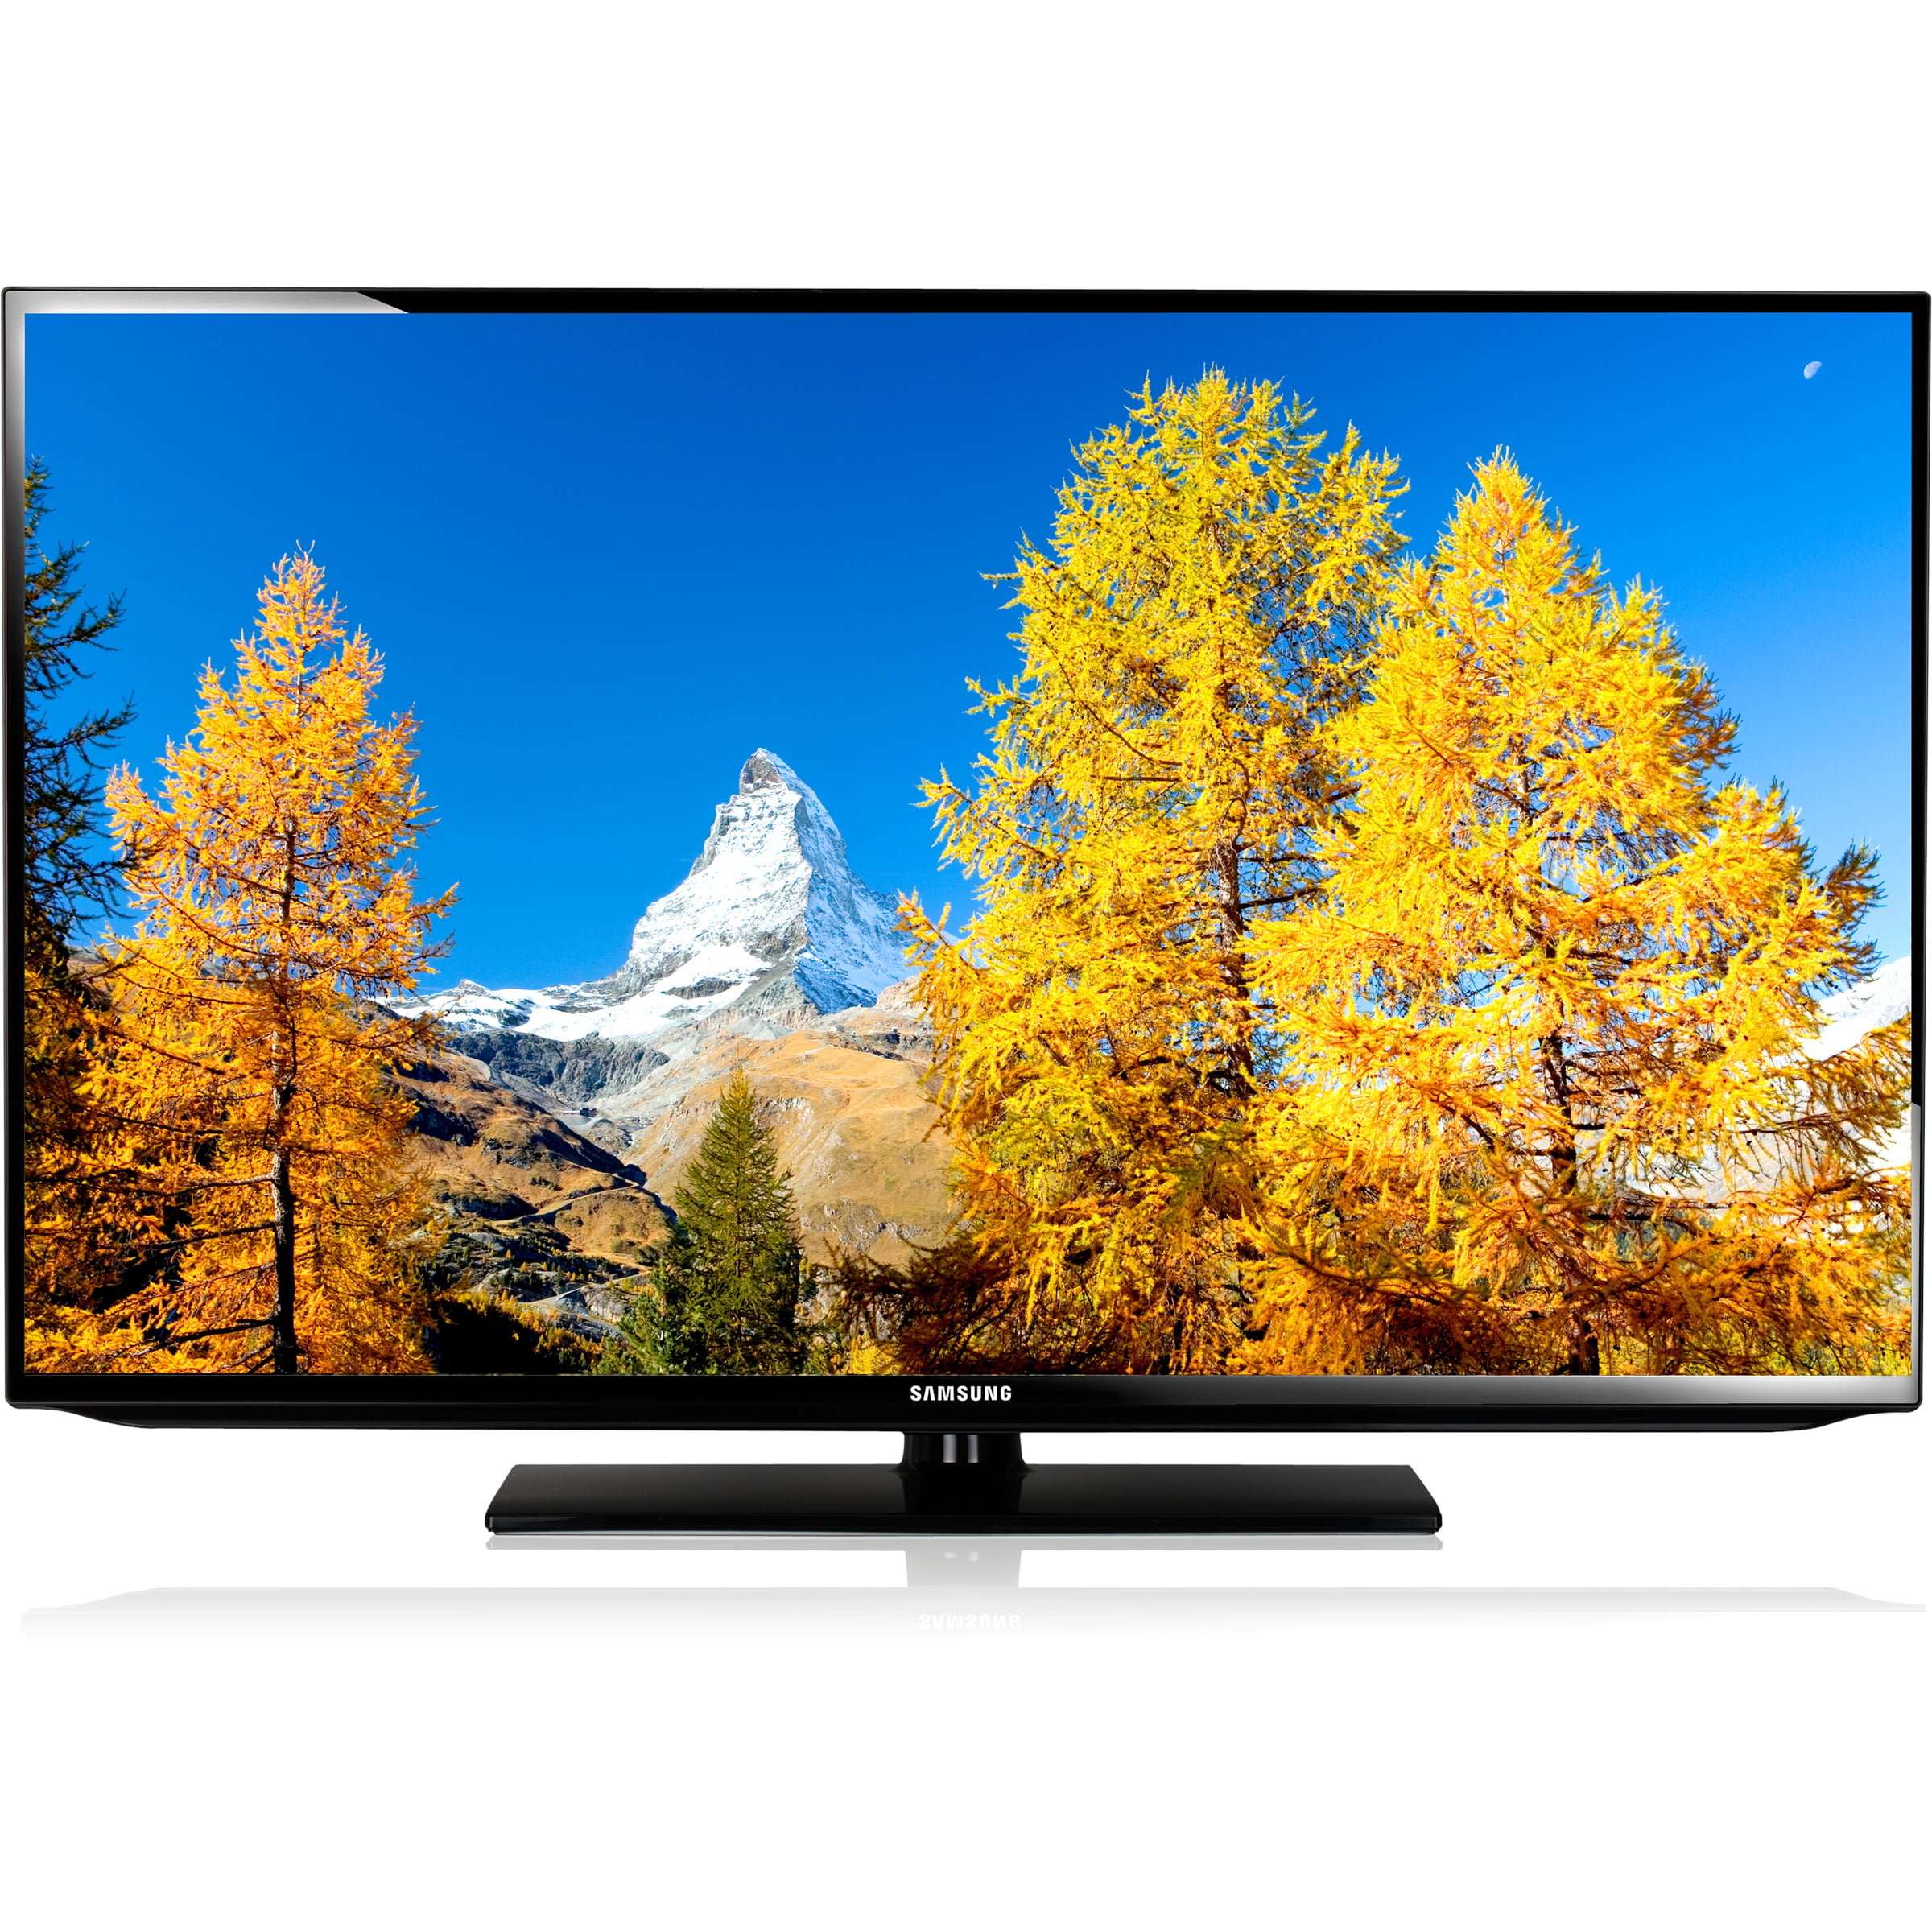 ildsted blæse hul præmie Samsung 46" Class HDTV (1080p) LED-LCD TV (UN46EH5000) - Walmart.com